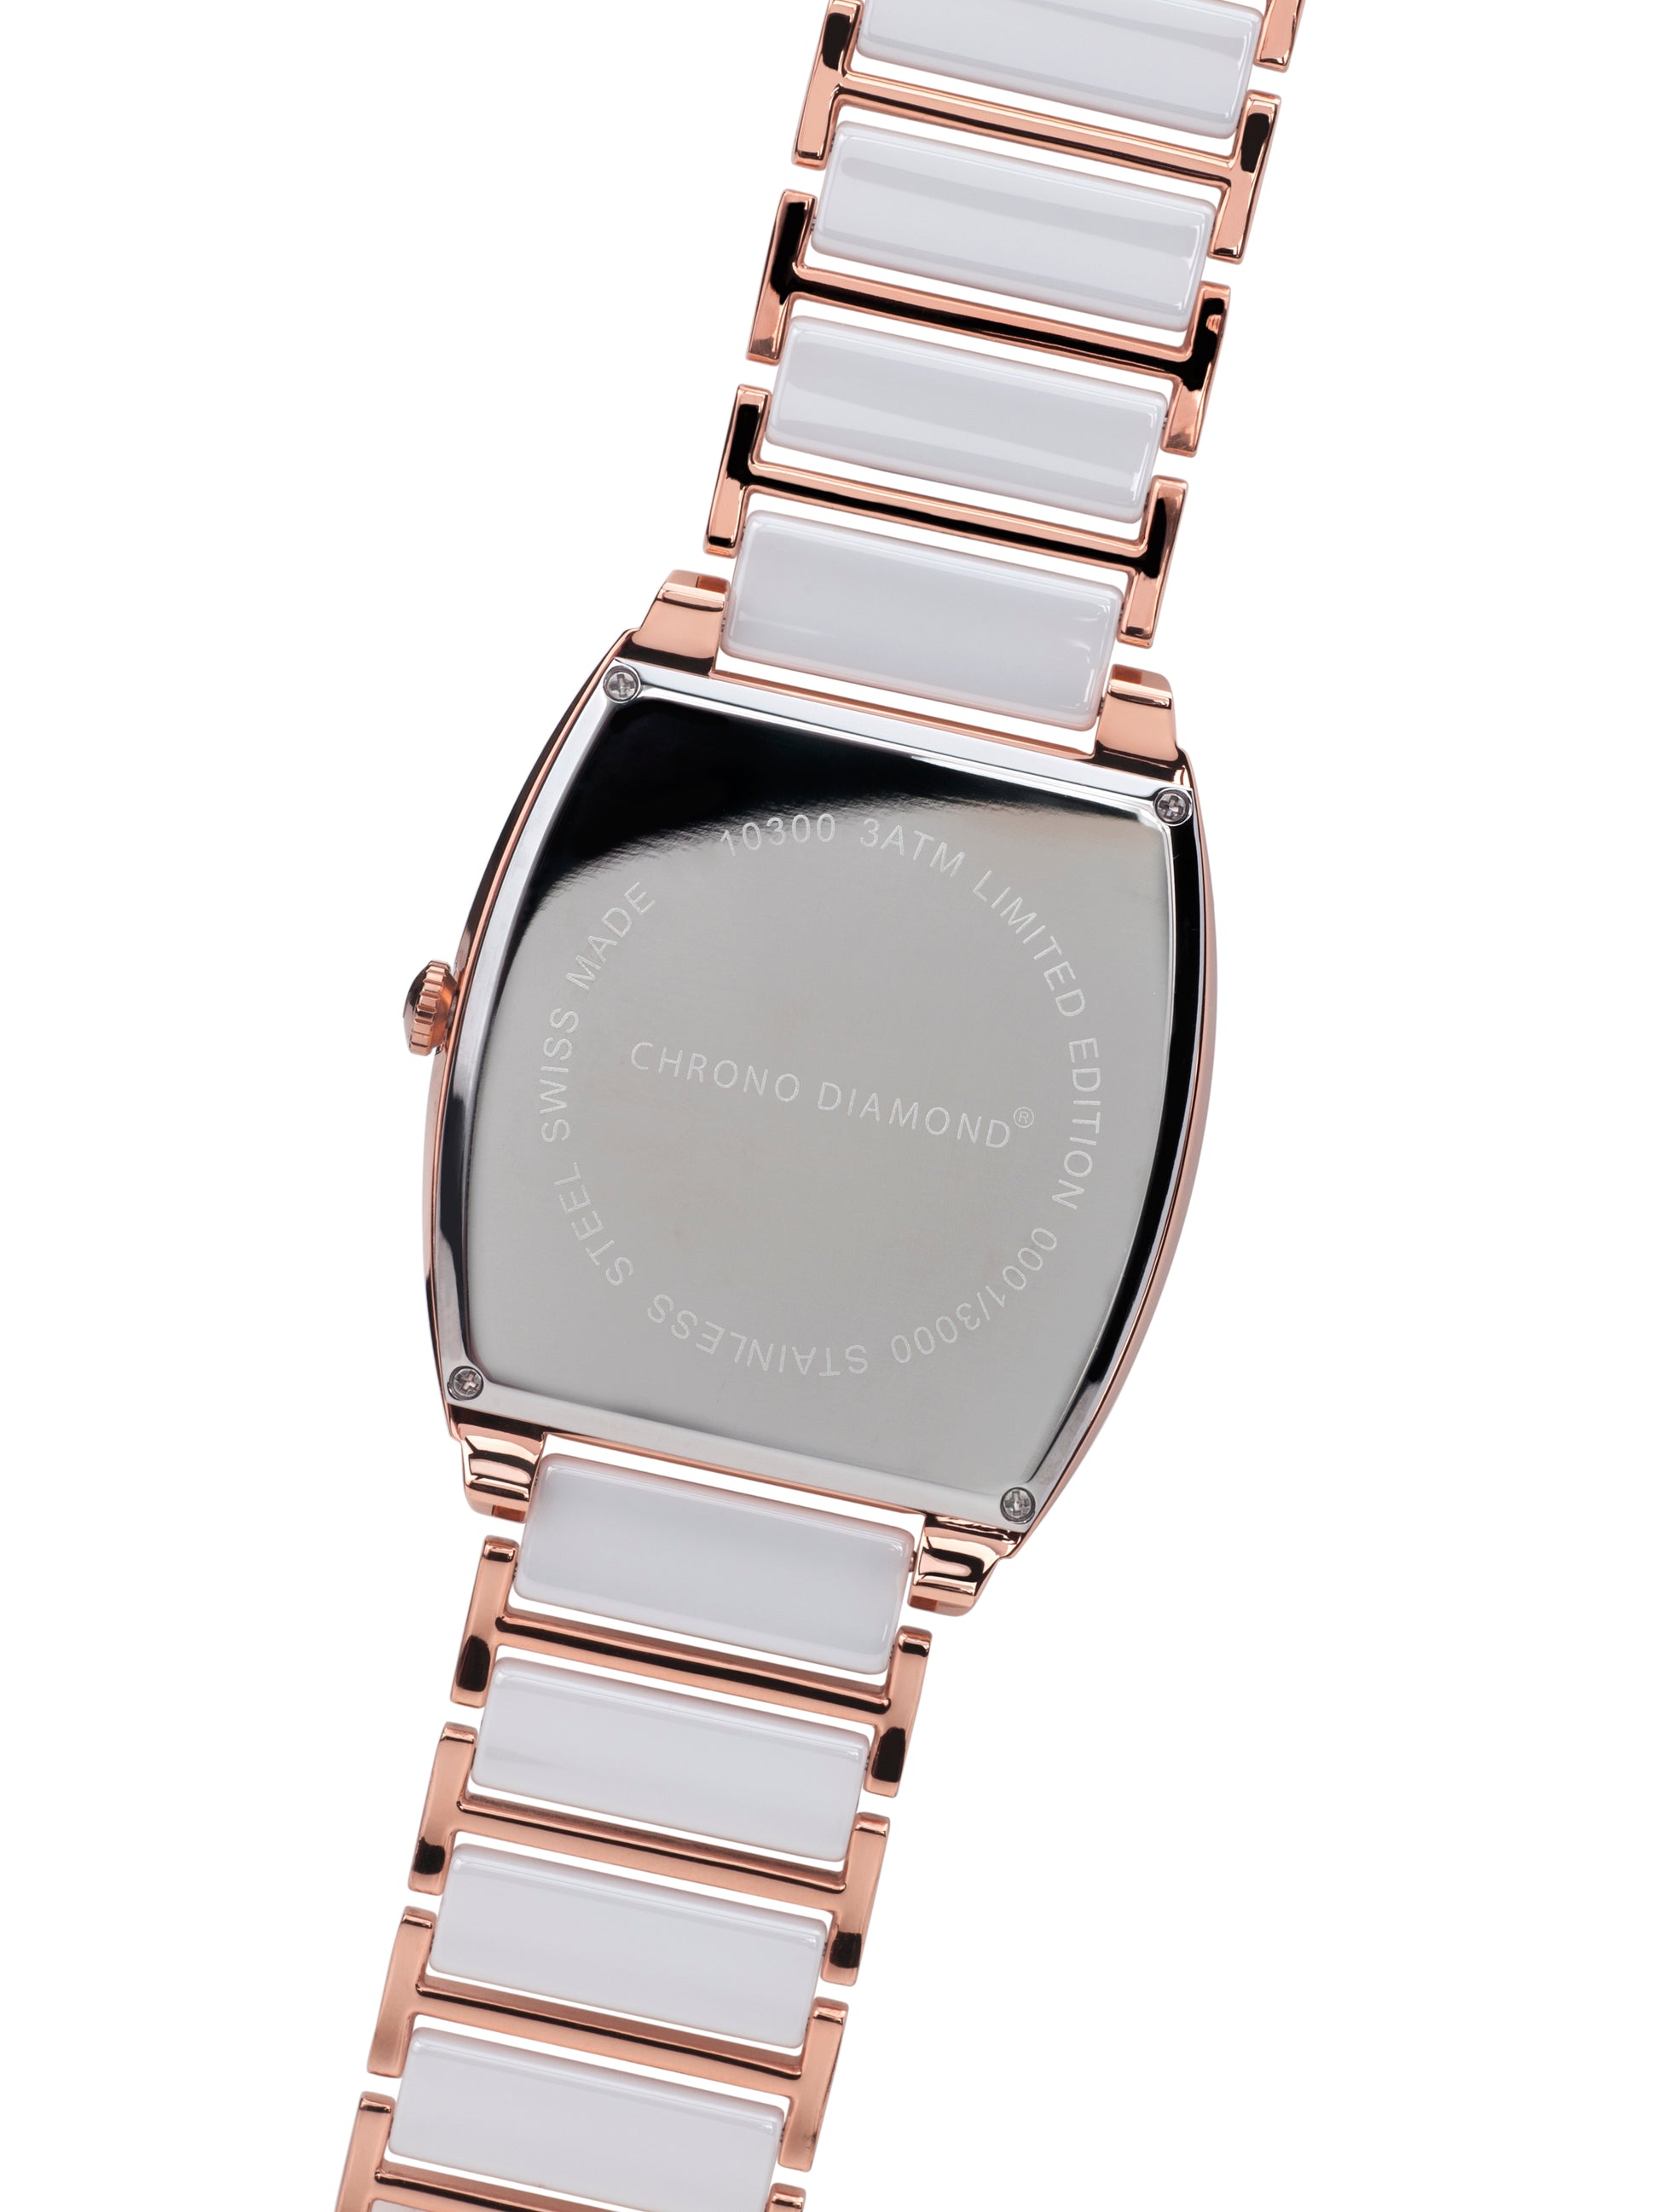 Automatic watches — Leandro — Chrono Diamond — rosegold IP ceramic white